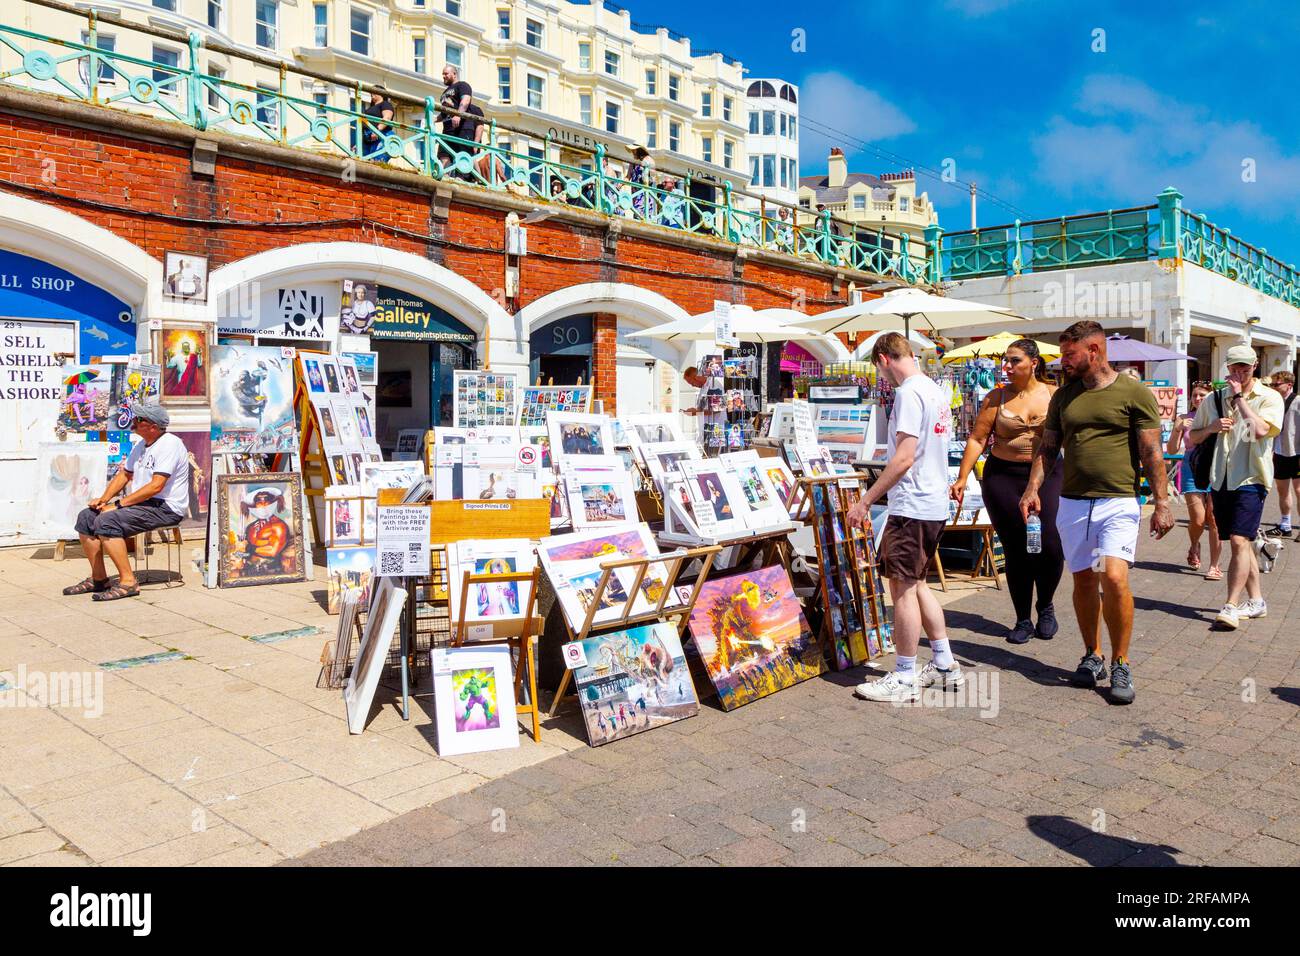 Stalls with art along the seaside promenade, Brighton, UK Stock Photo